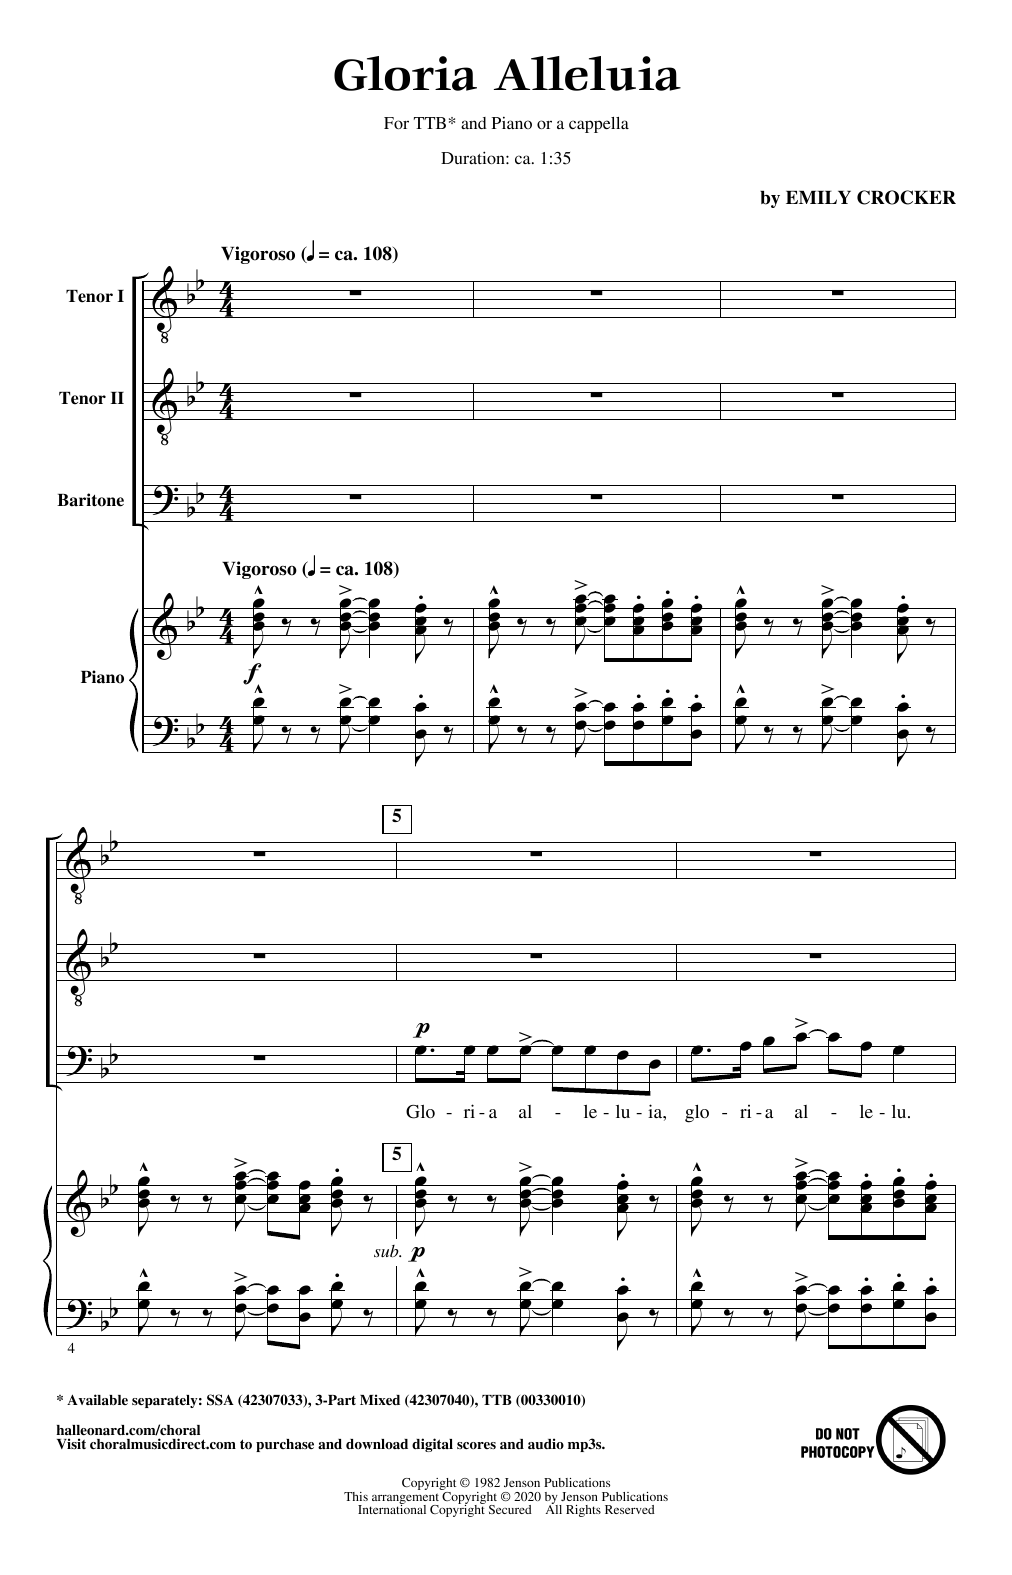 Emily Crocker Gloria Alleluia Sheet Music Notes & Chords for SSA Choir - Download or Print PDF